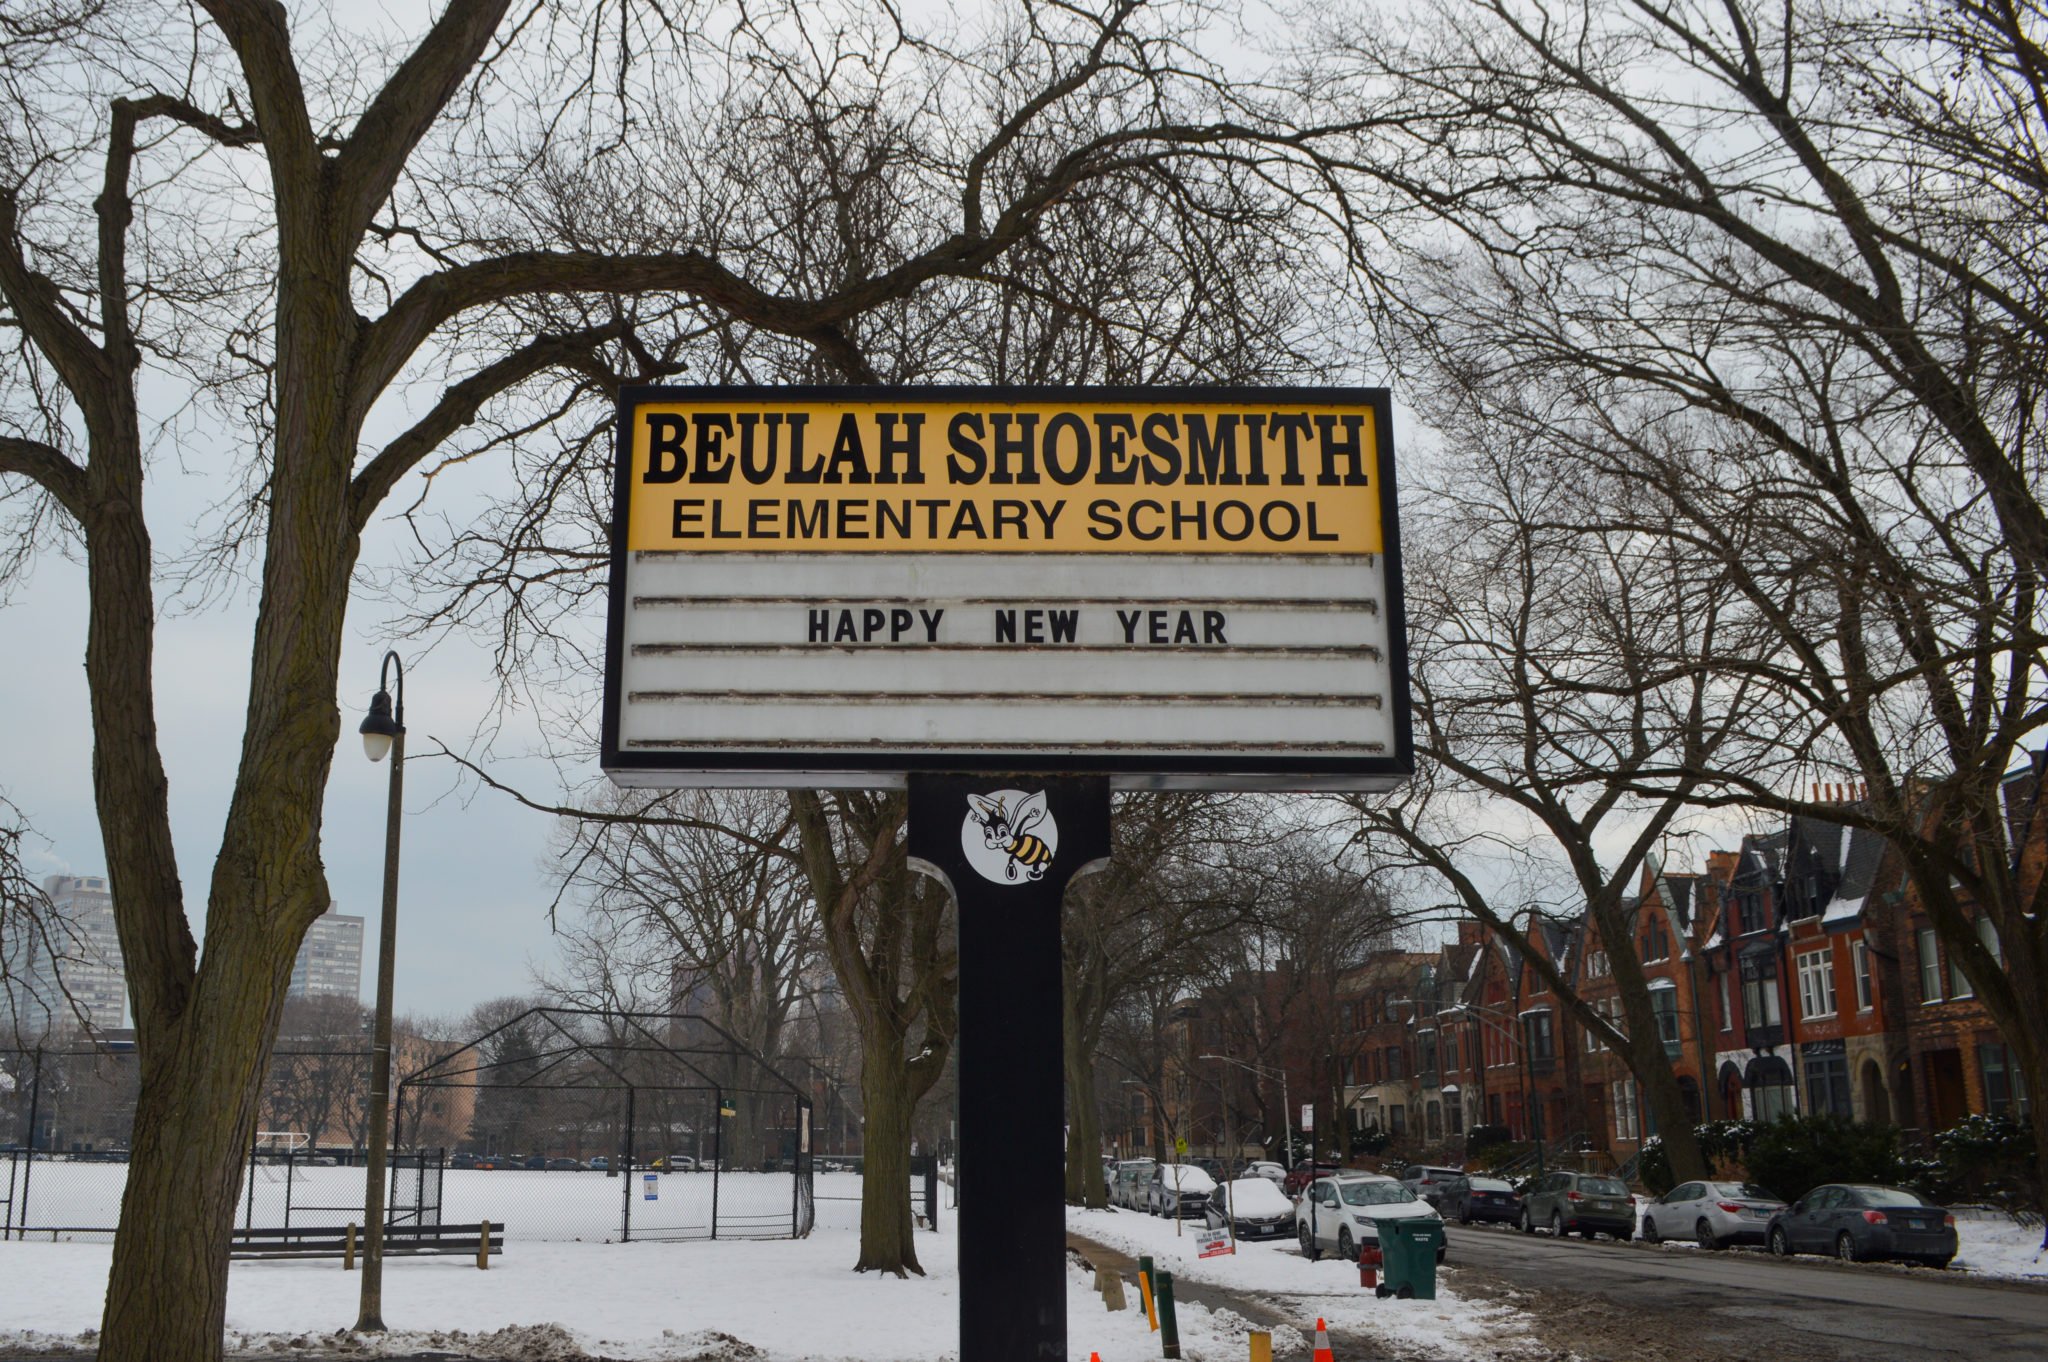 Beulah Shoesmith school sign